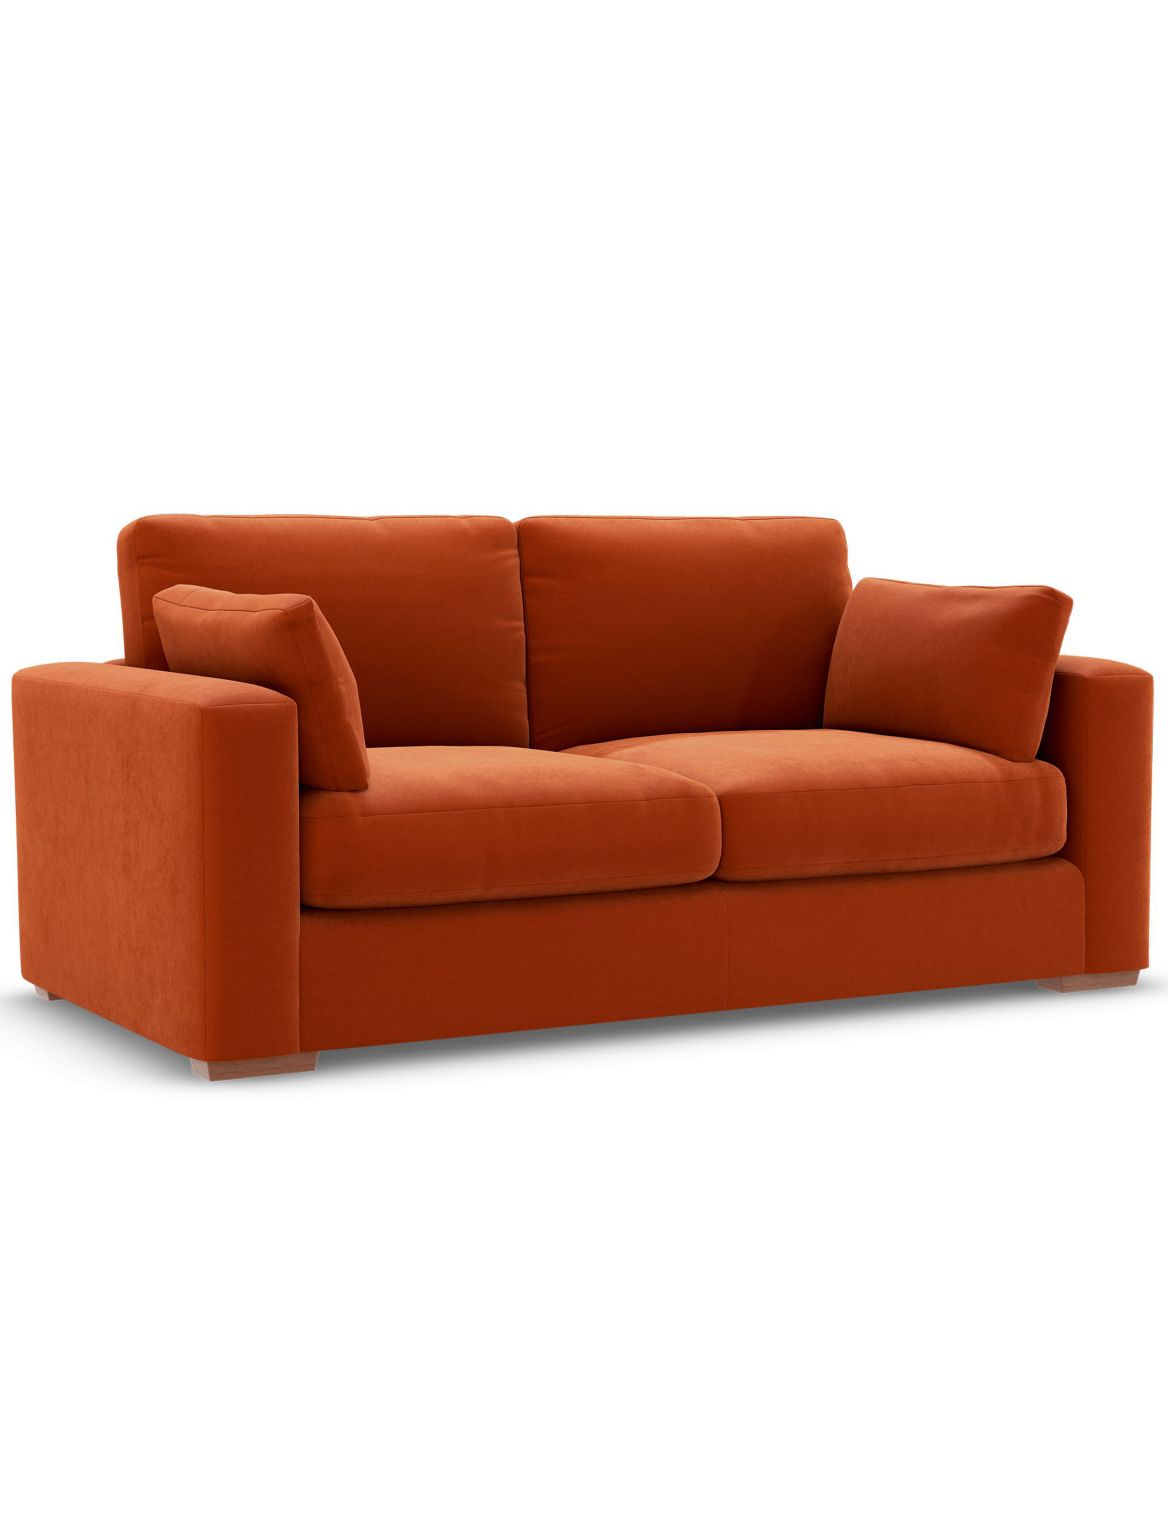 Boston Large Sofa orange